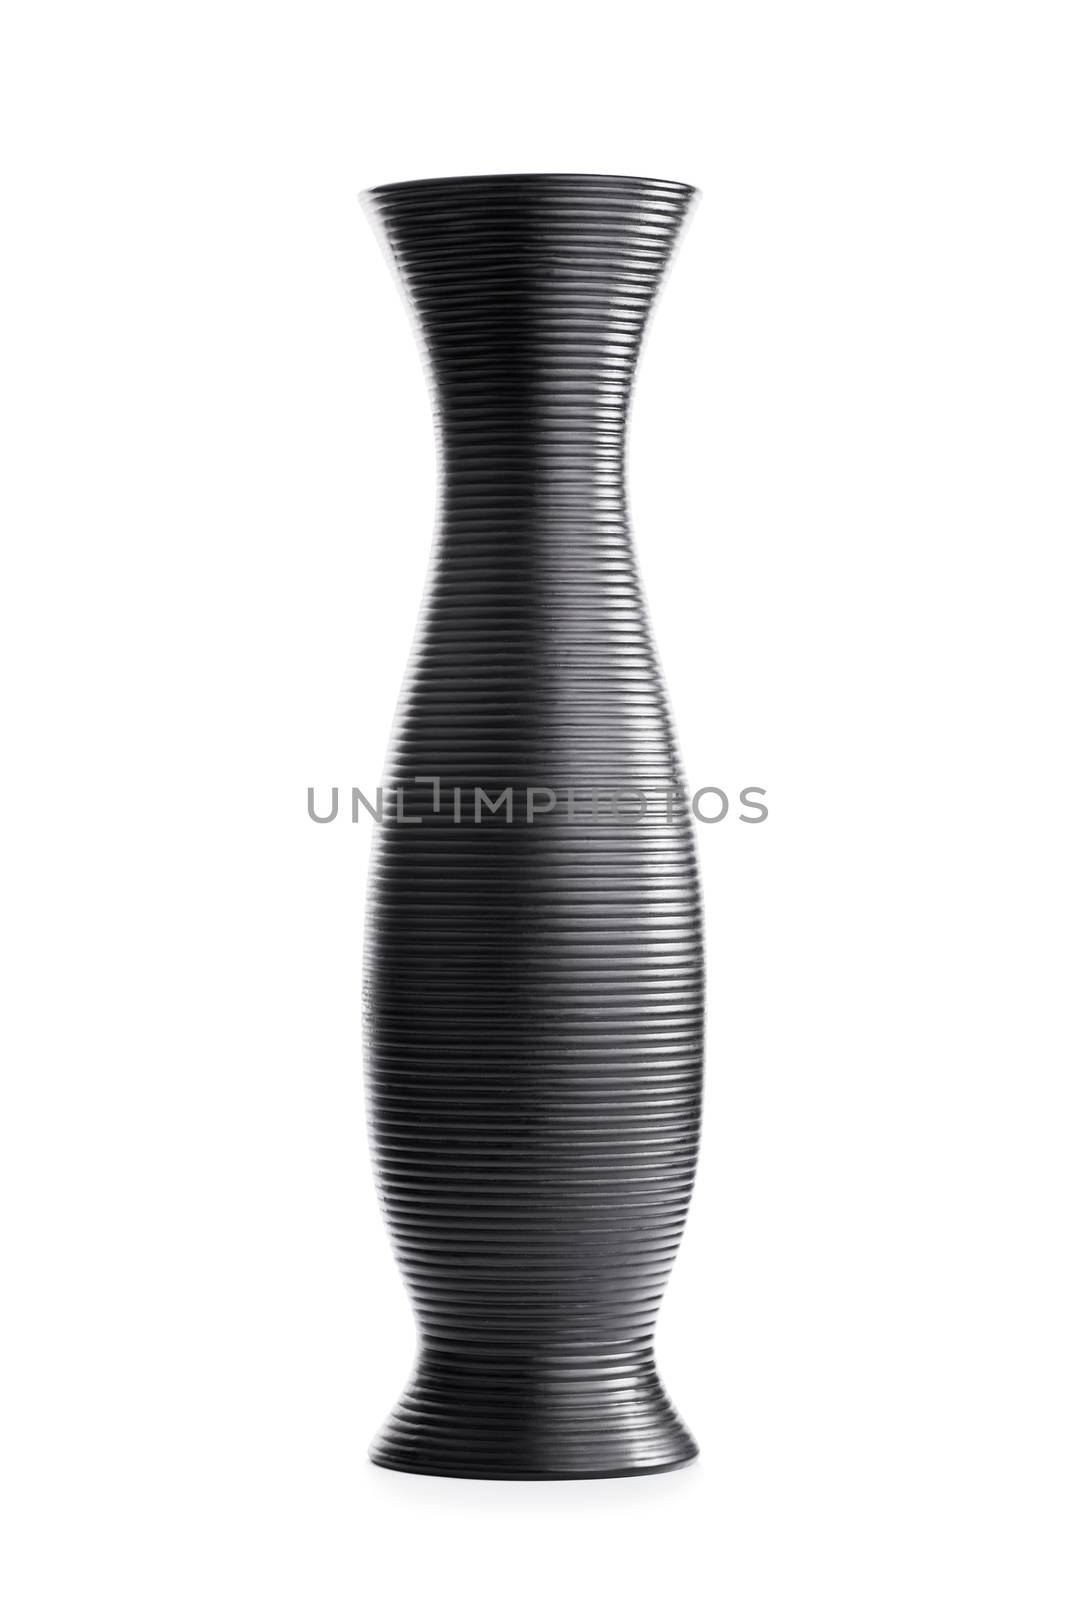 Black vase by Mendelex